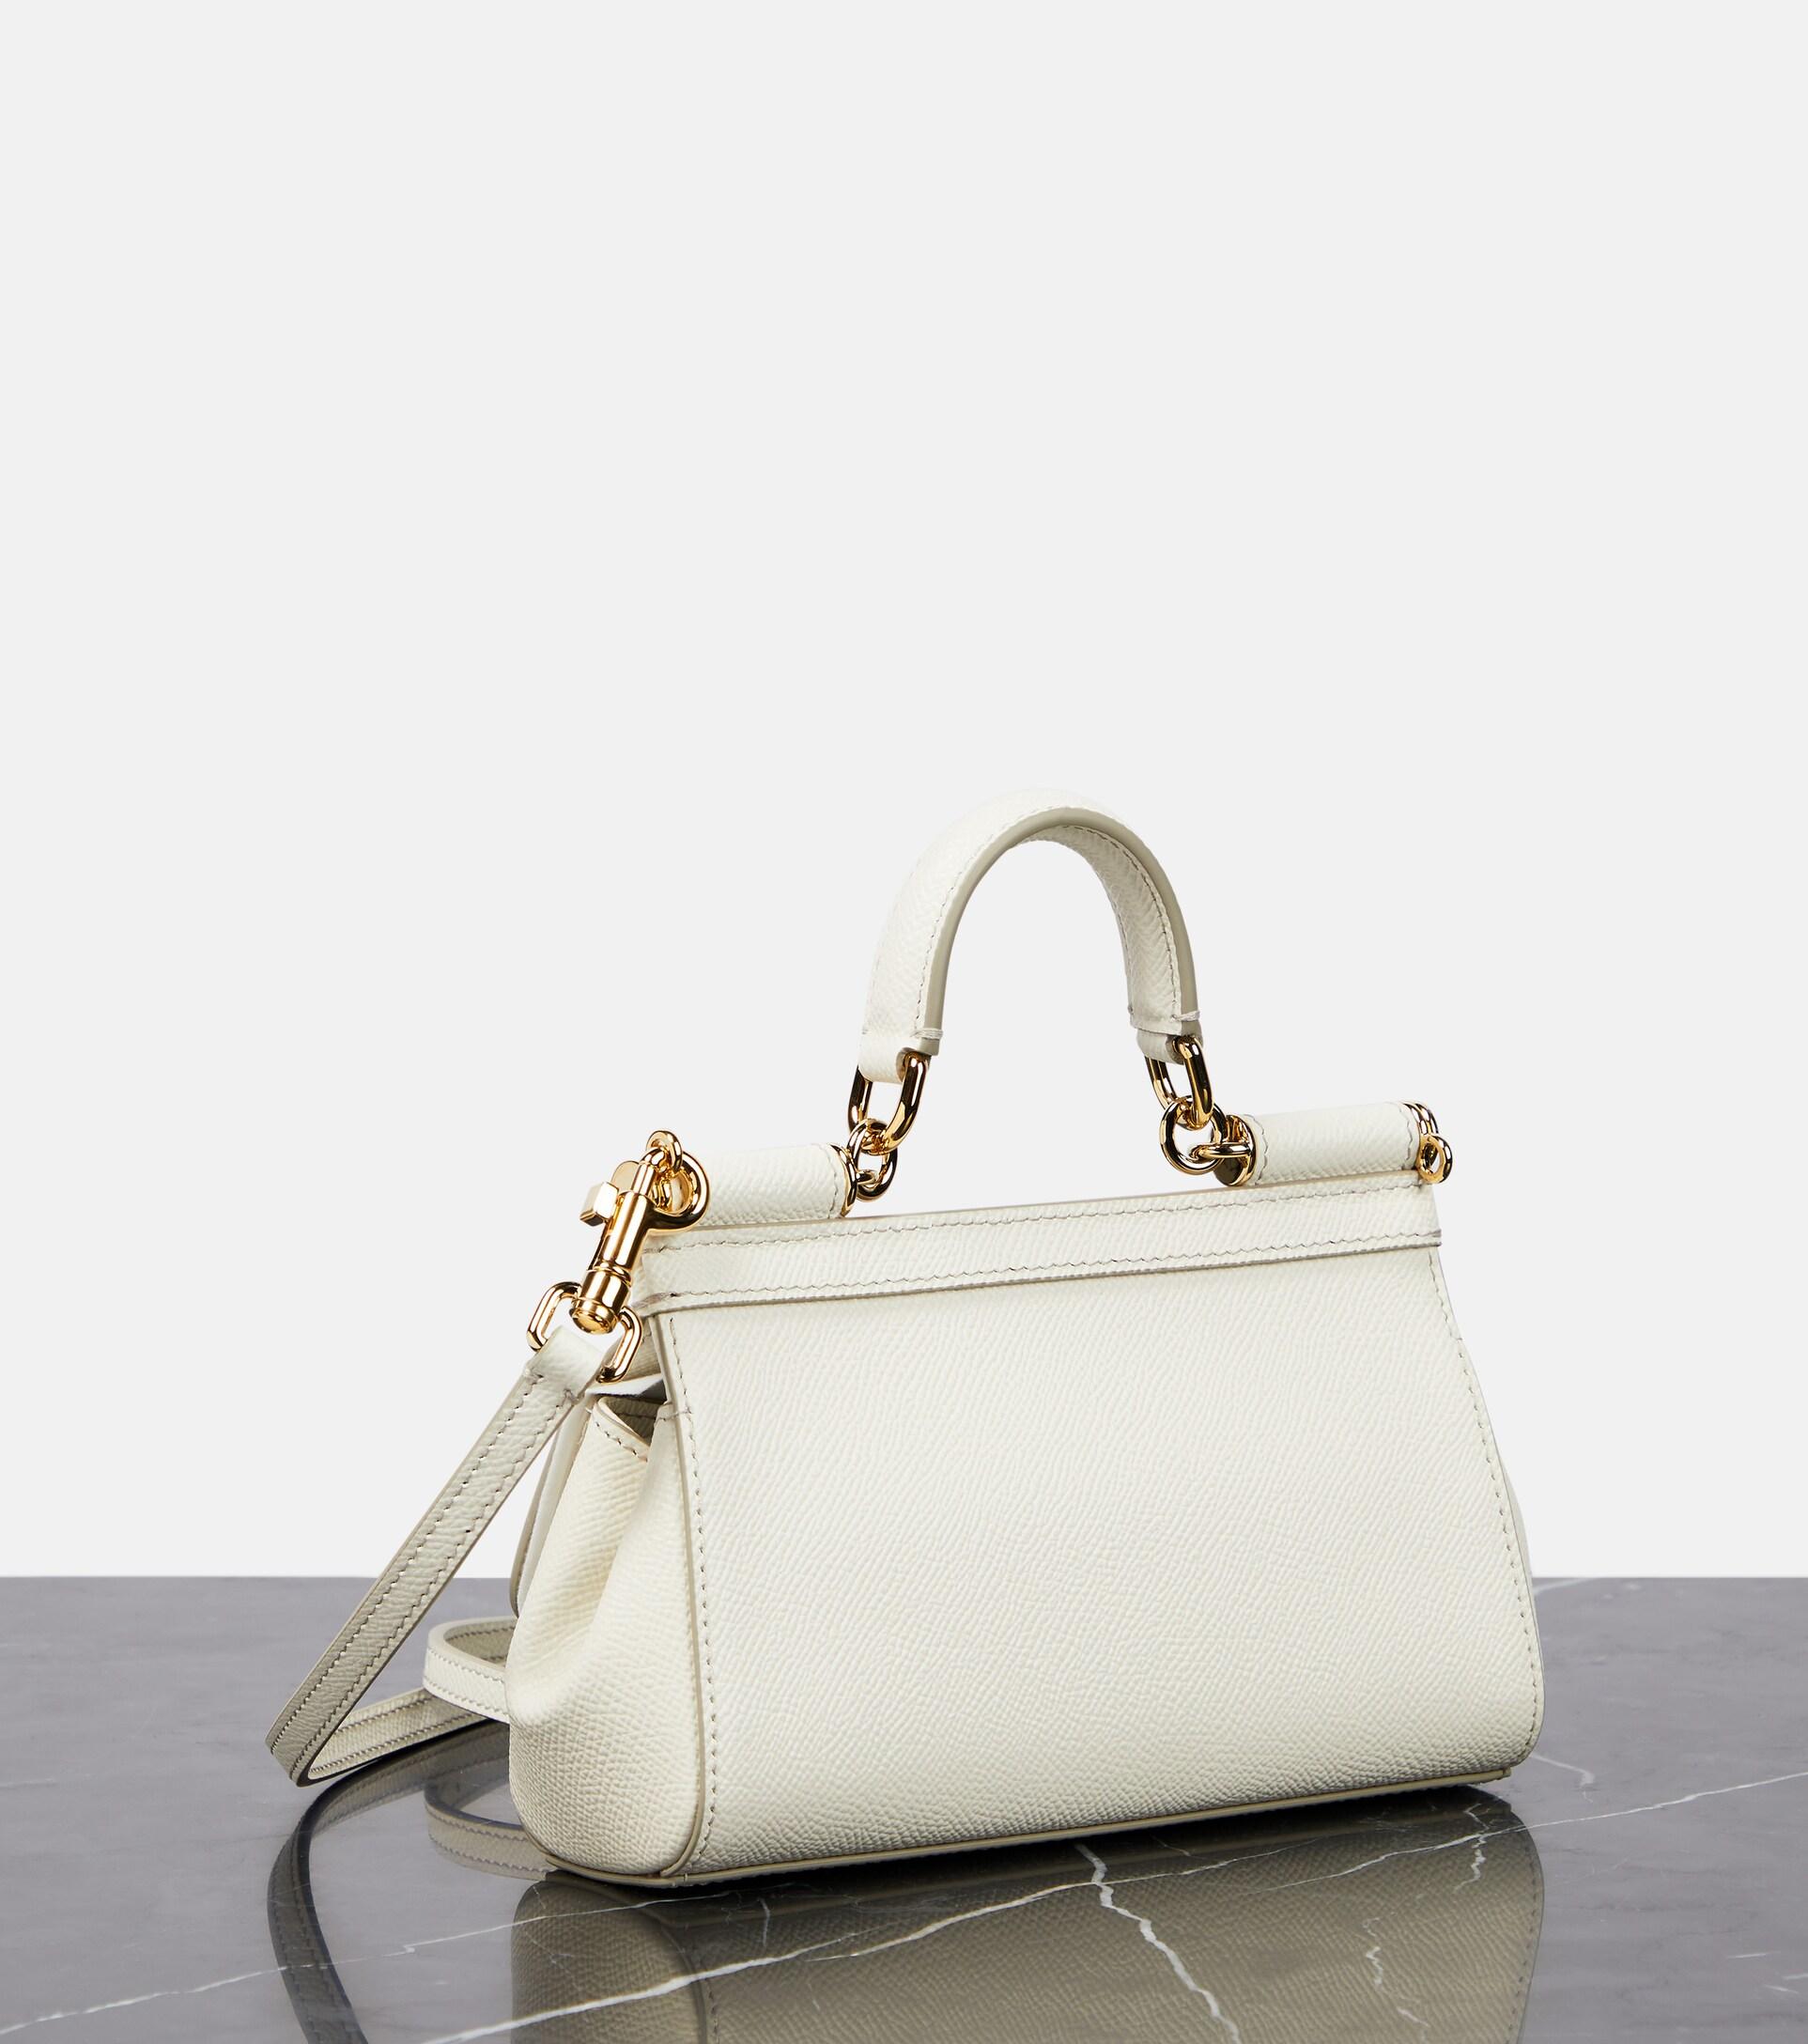 Dolce & Gabbana X Kim Sicily Small Leather Shoulder Bag in White